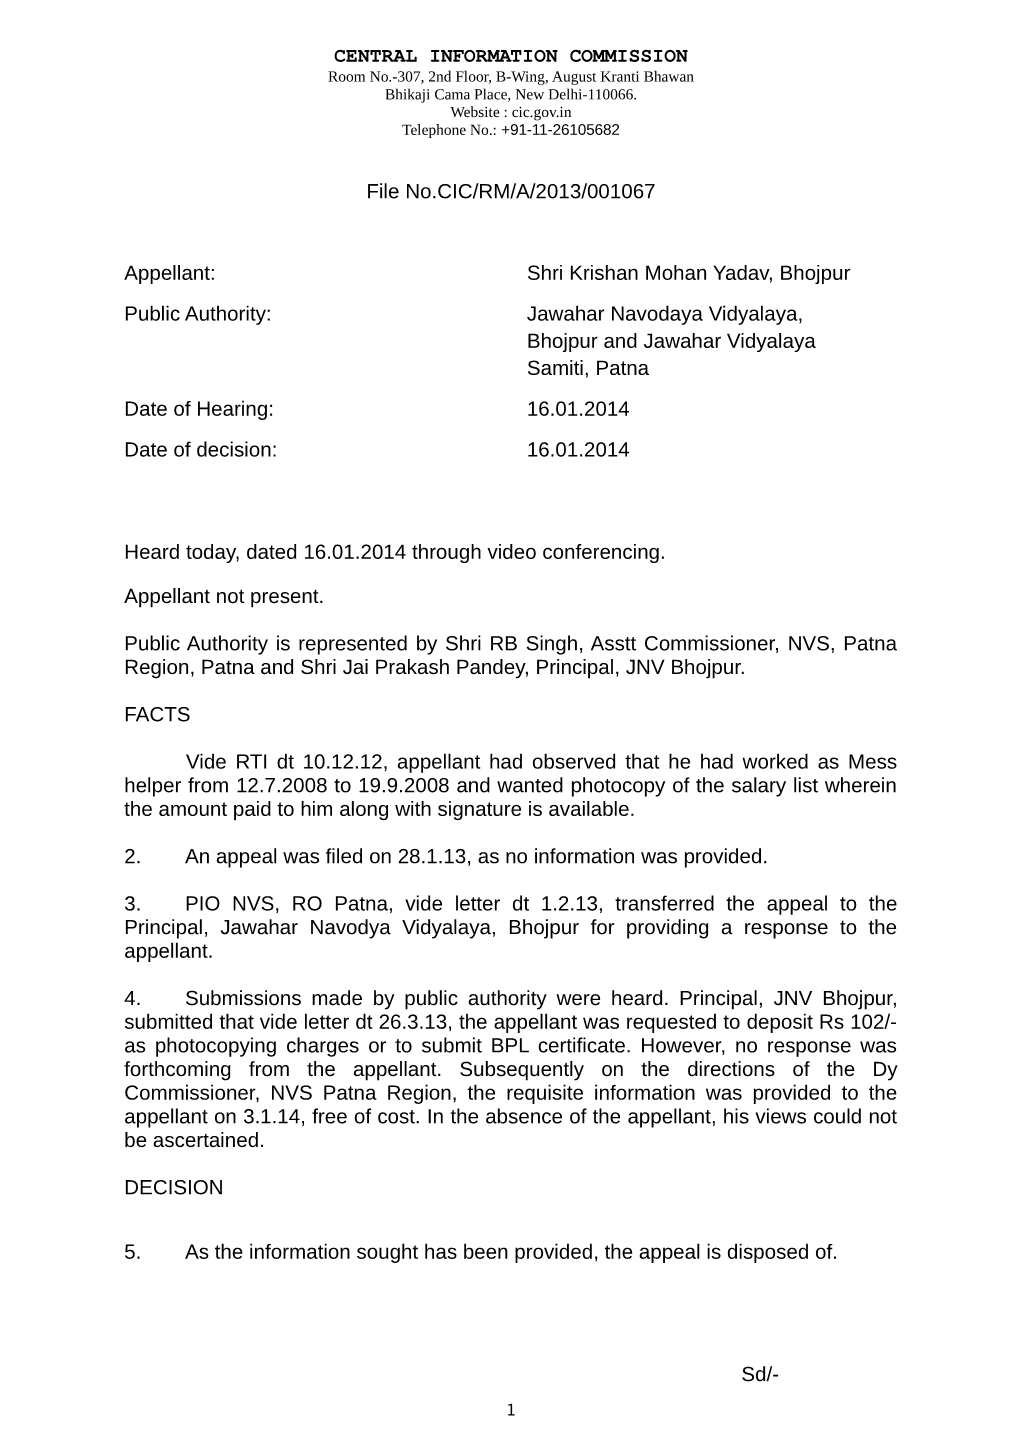 CENTRAL INFORMATION COMMISSION File No.CIC/RM/A/2013/001067 Appellant: Shri Krishan Mohan Yadav, Bhojpur Public Authority